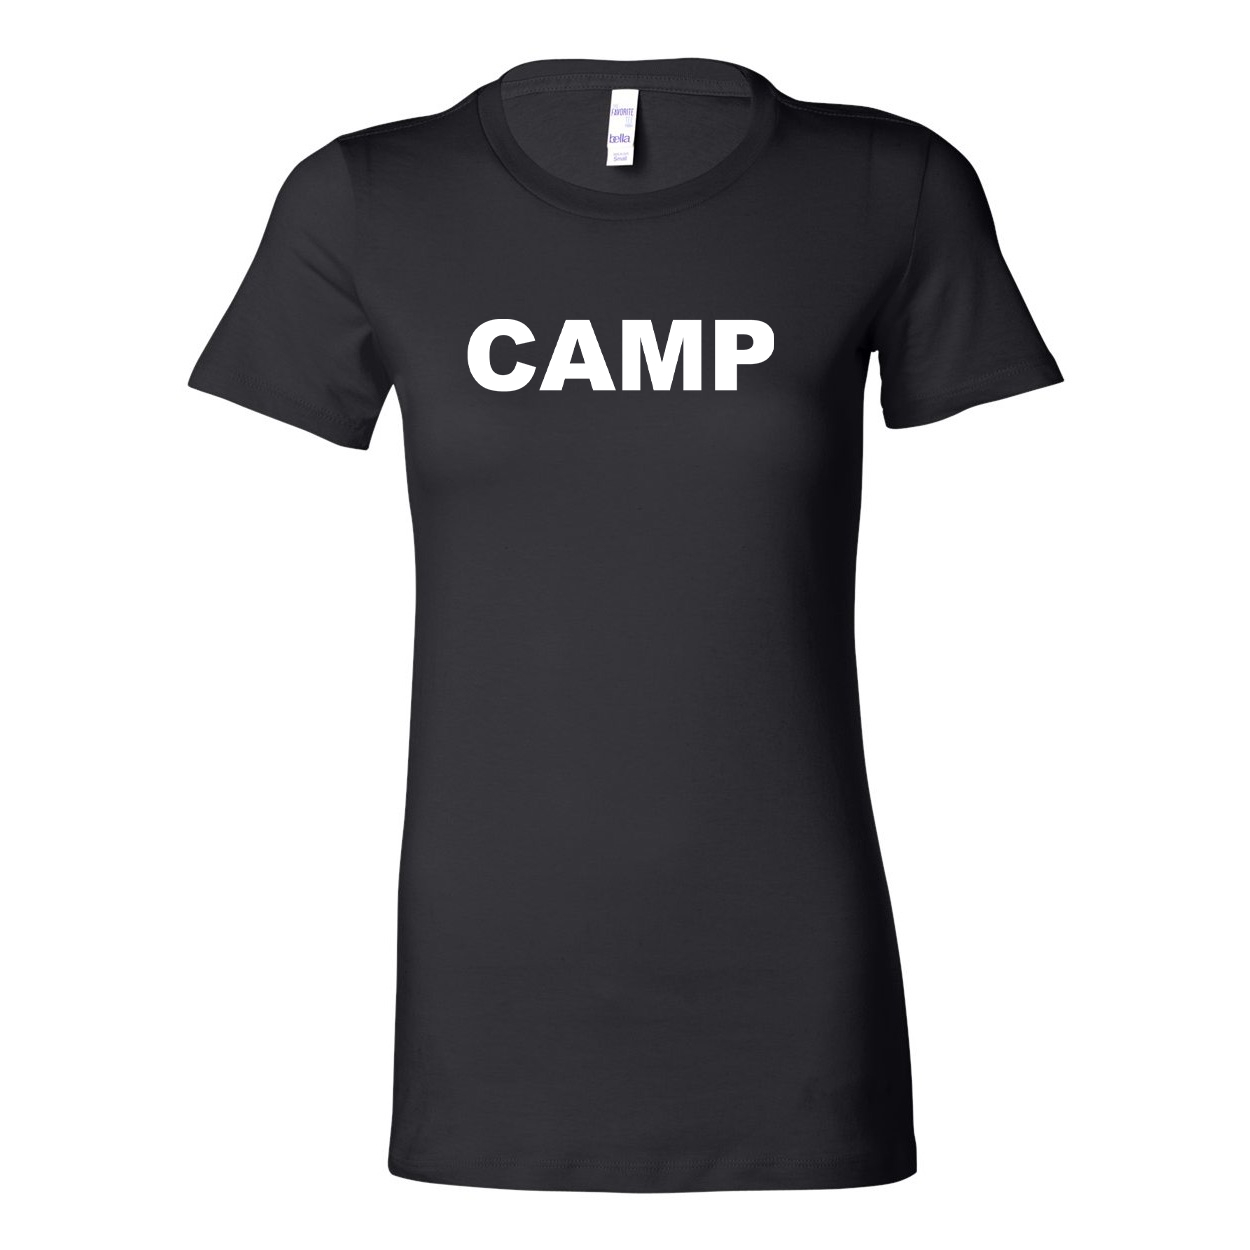 Camp Brand Logo Classic Women's Fitted Tri-Blend T-Shirt Black (White Logo)